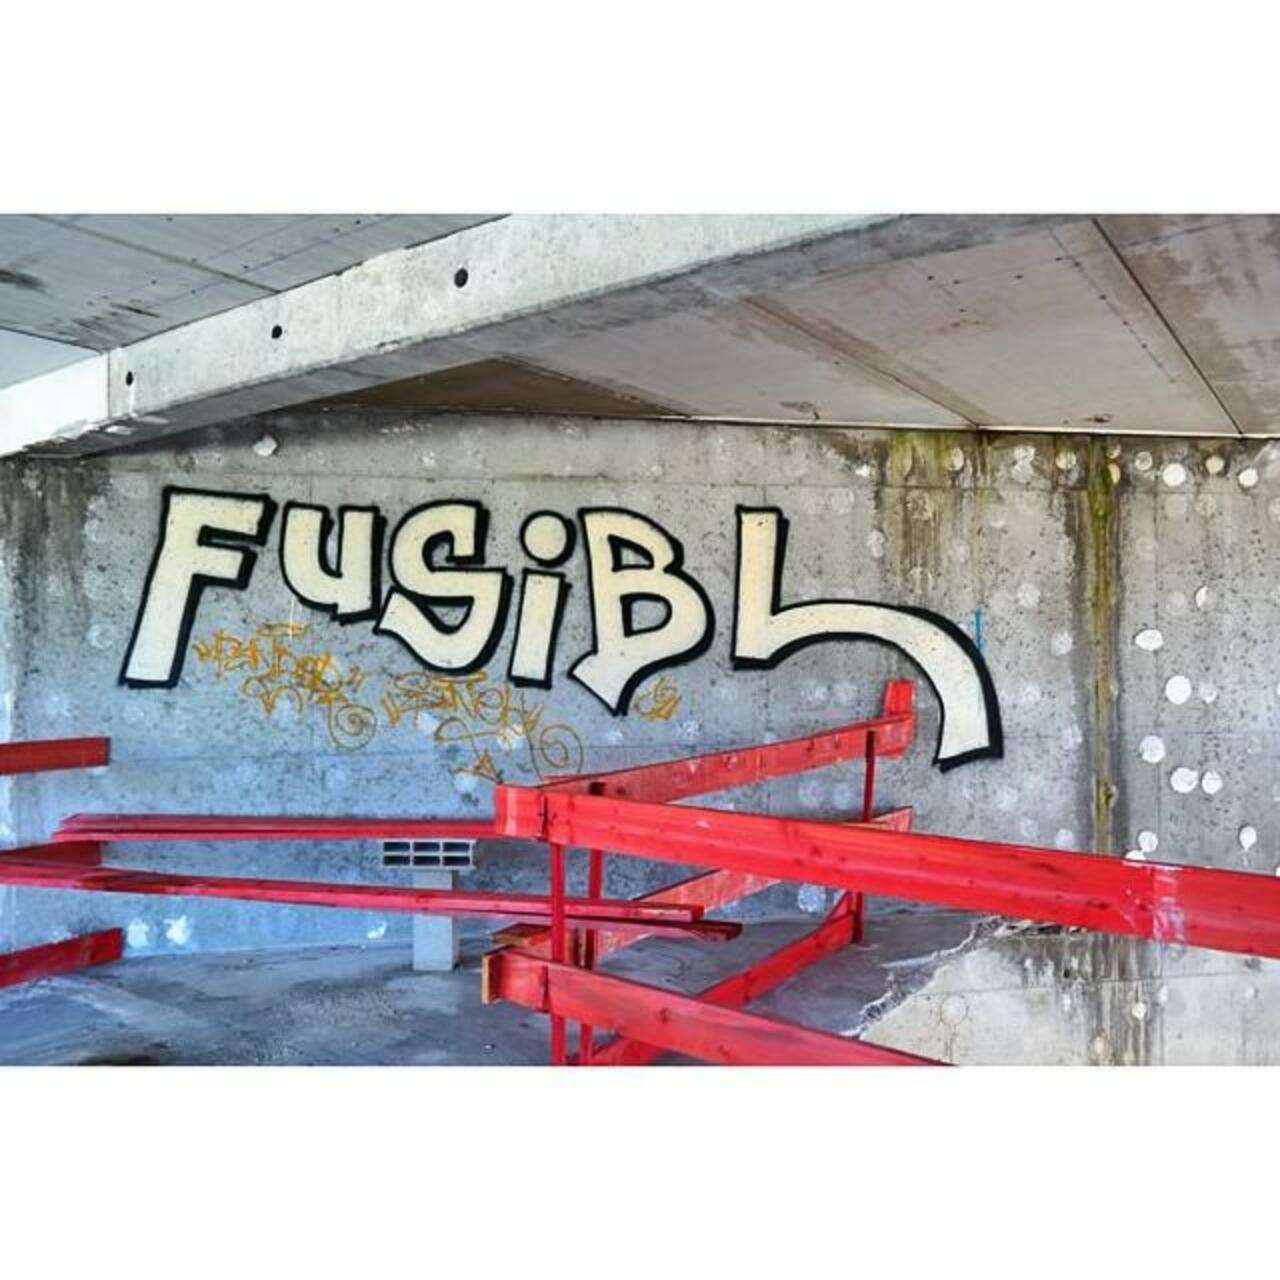 #HastaLaVista #Street #Art #StreetArt #Graffiti #Graff #Graph #GraffitiLover #InstaGraffit… http://ift.tt/1fdEGTy http://t.co/tnHsFmLqqH